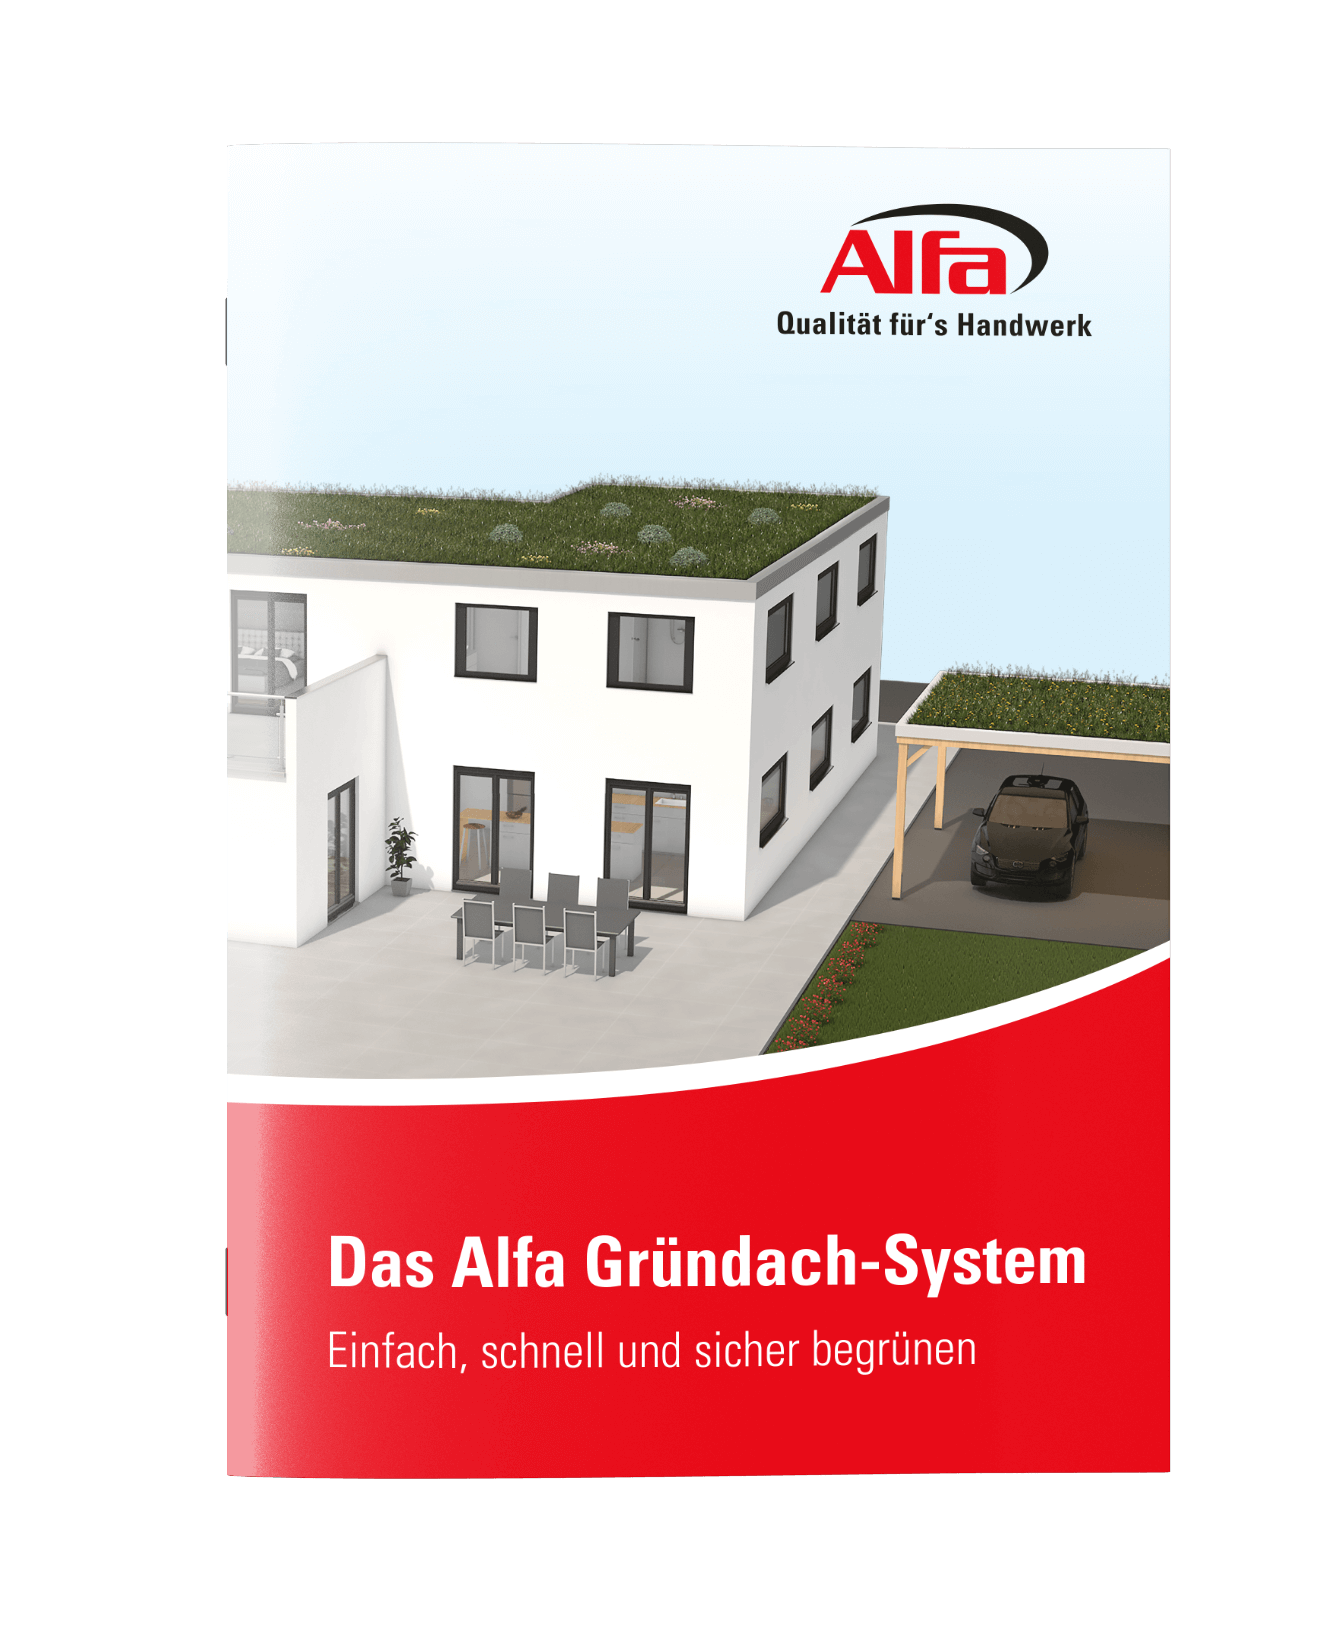 Info-Broschüre zum Alfa Gründach-System